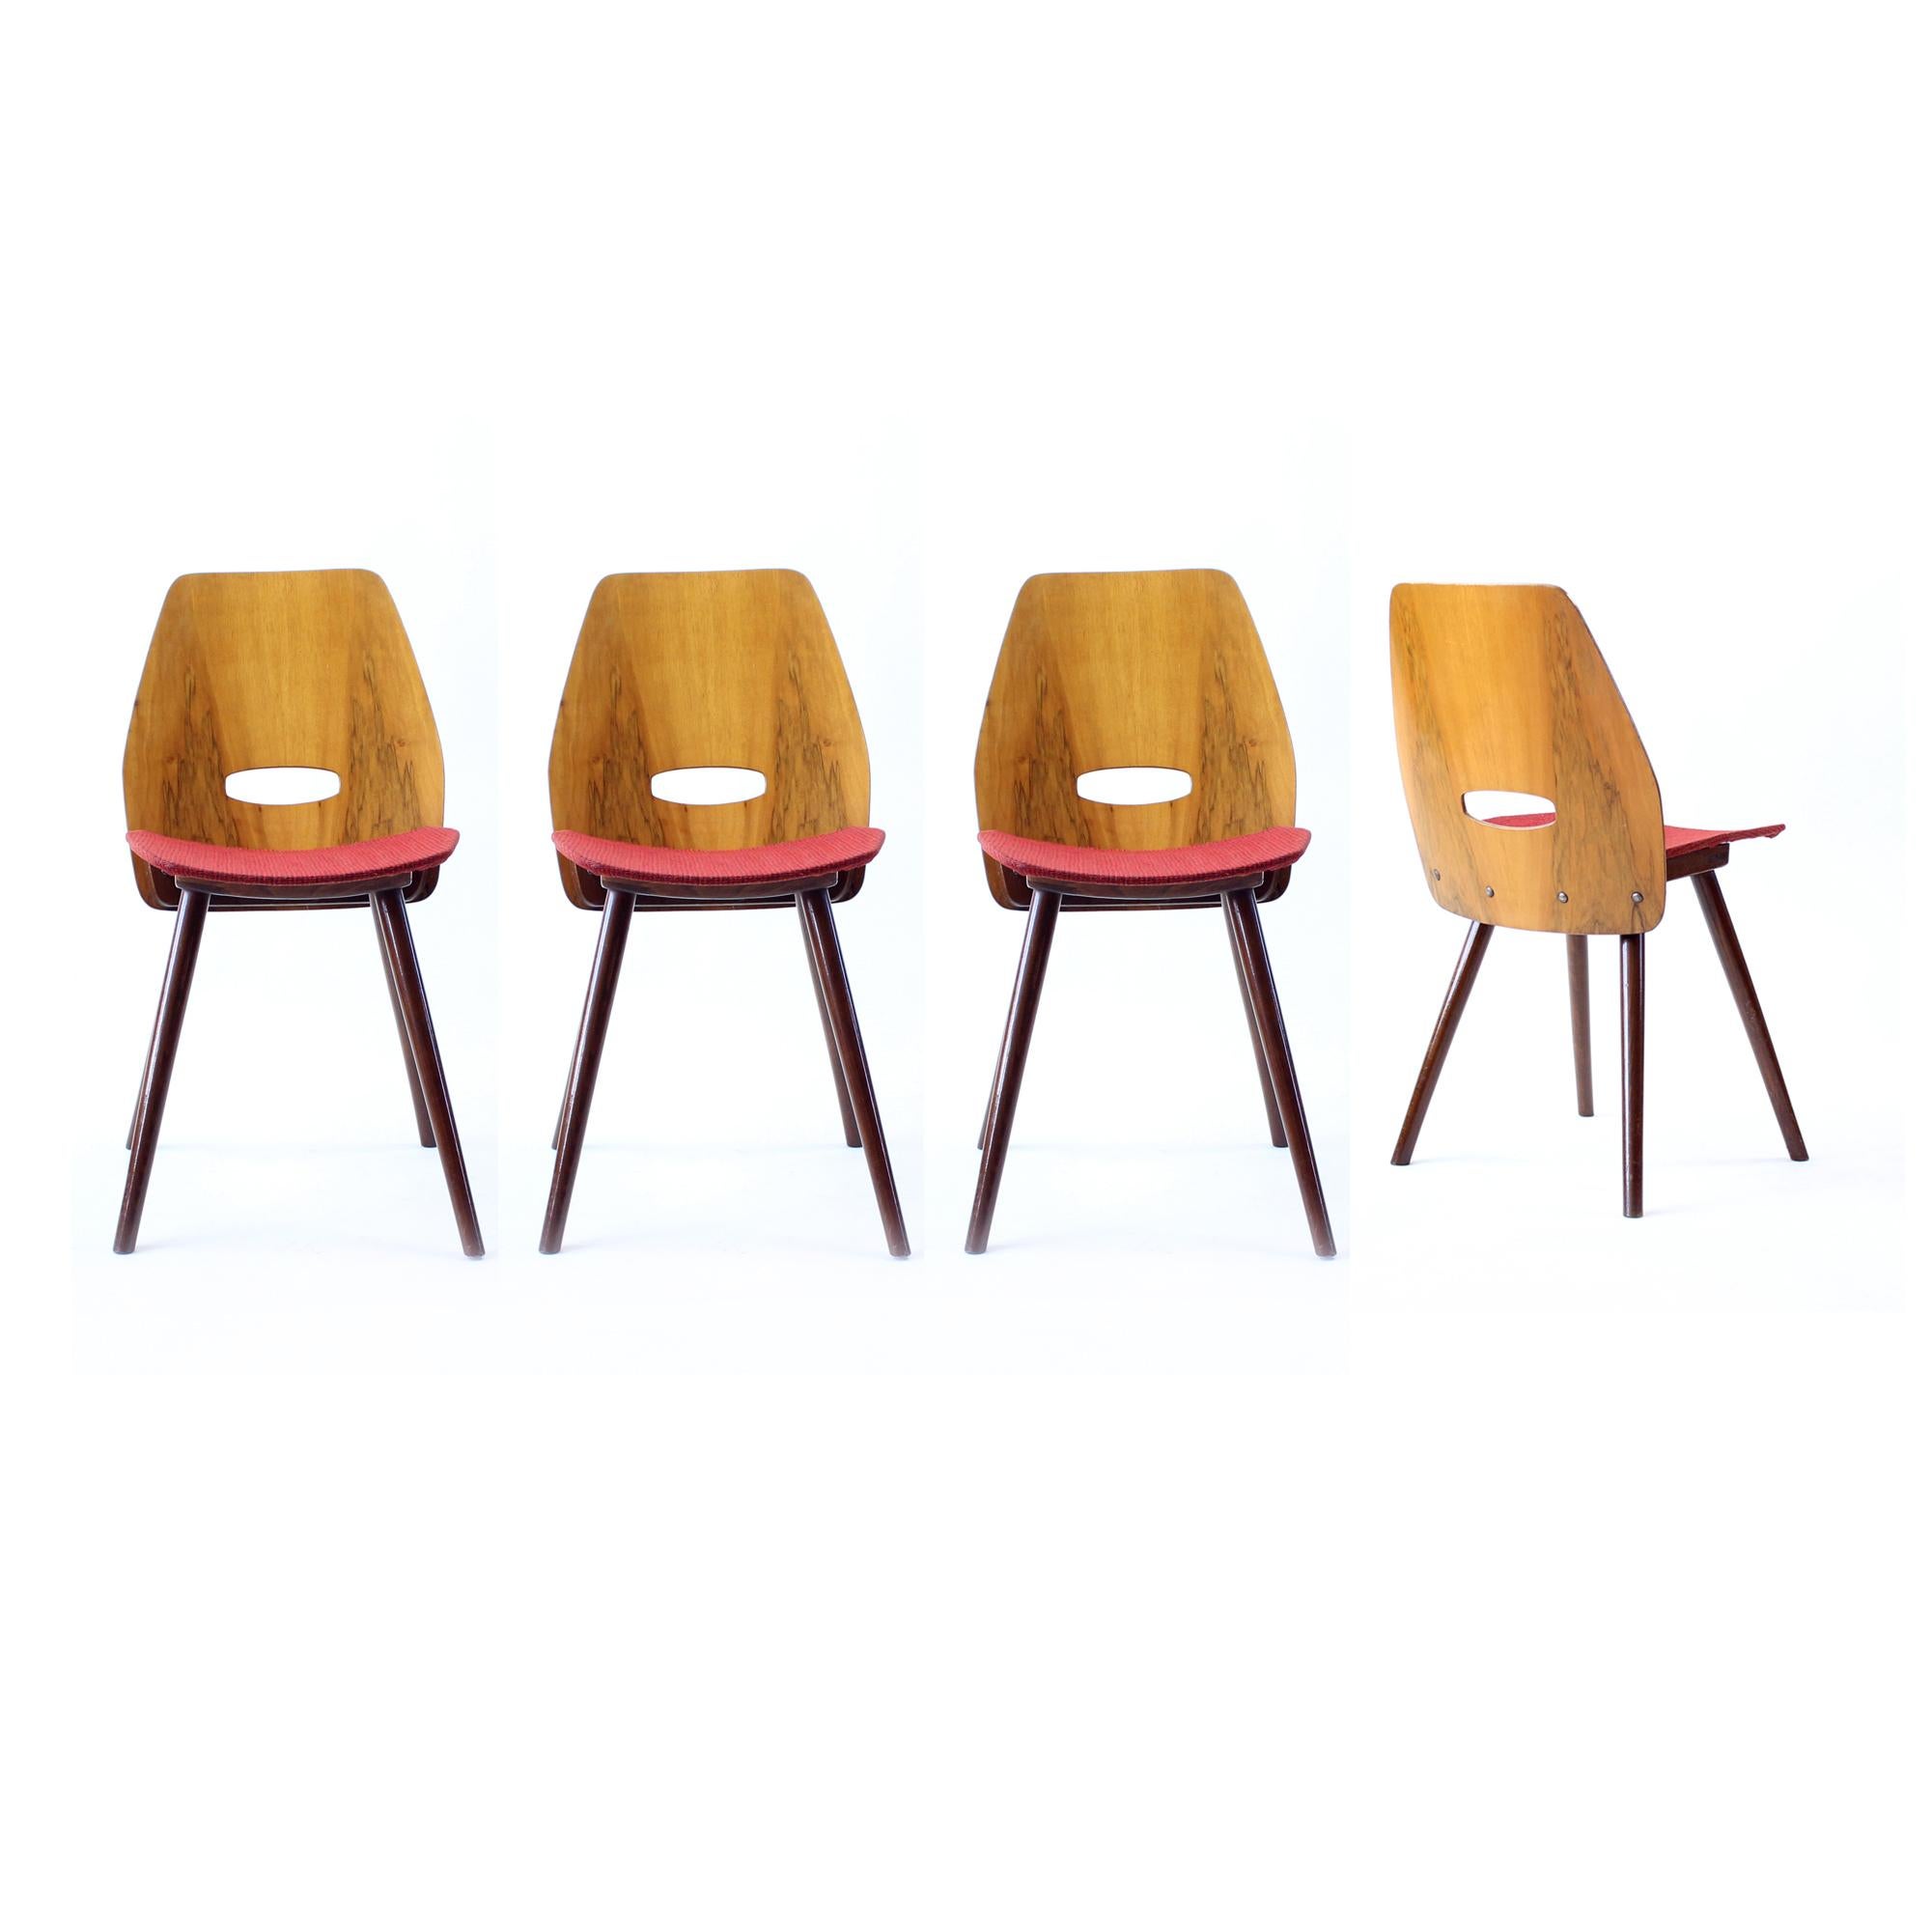 Frantisek Jirak Lollipop Dining Chairs In Walnut Veneer For Tatra, 1960s For Sale 6